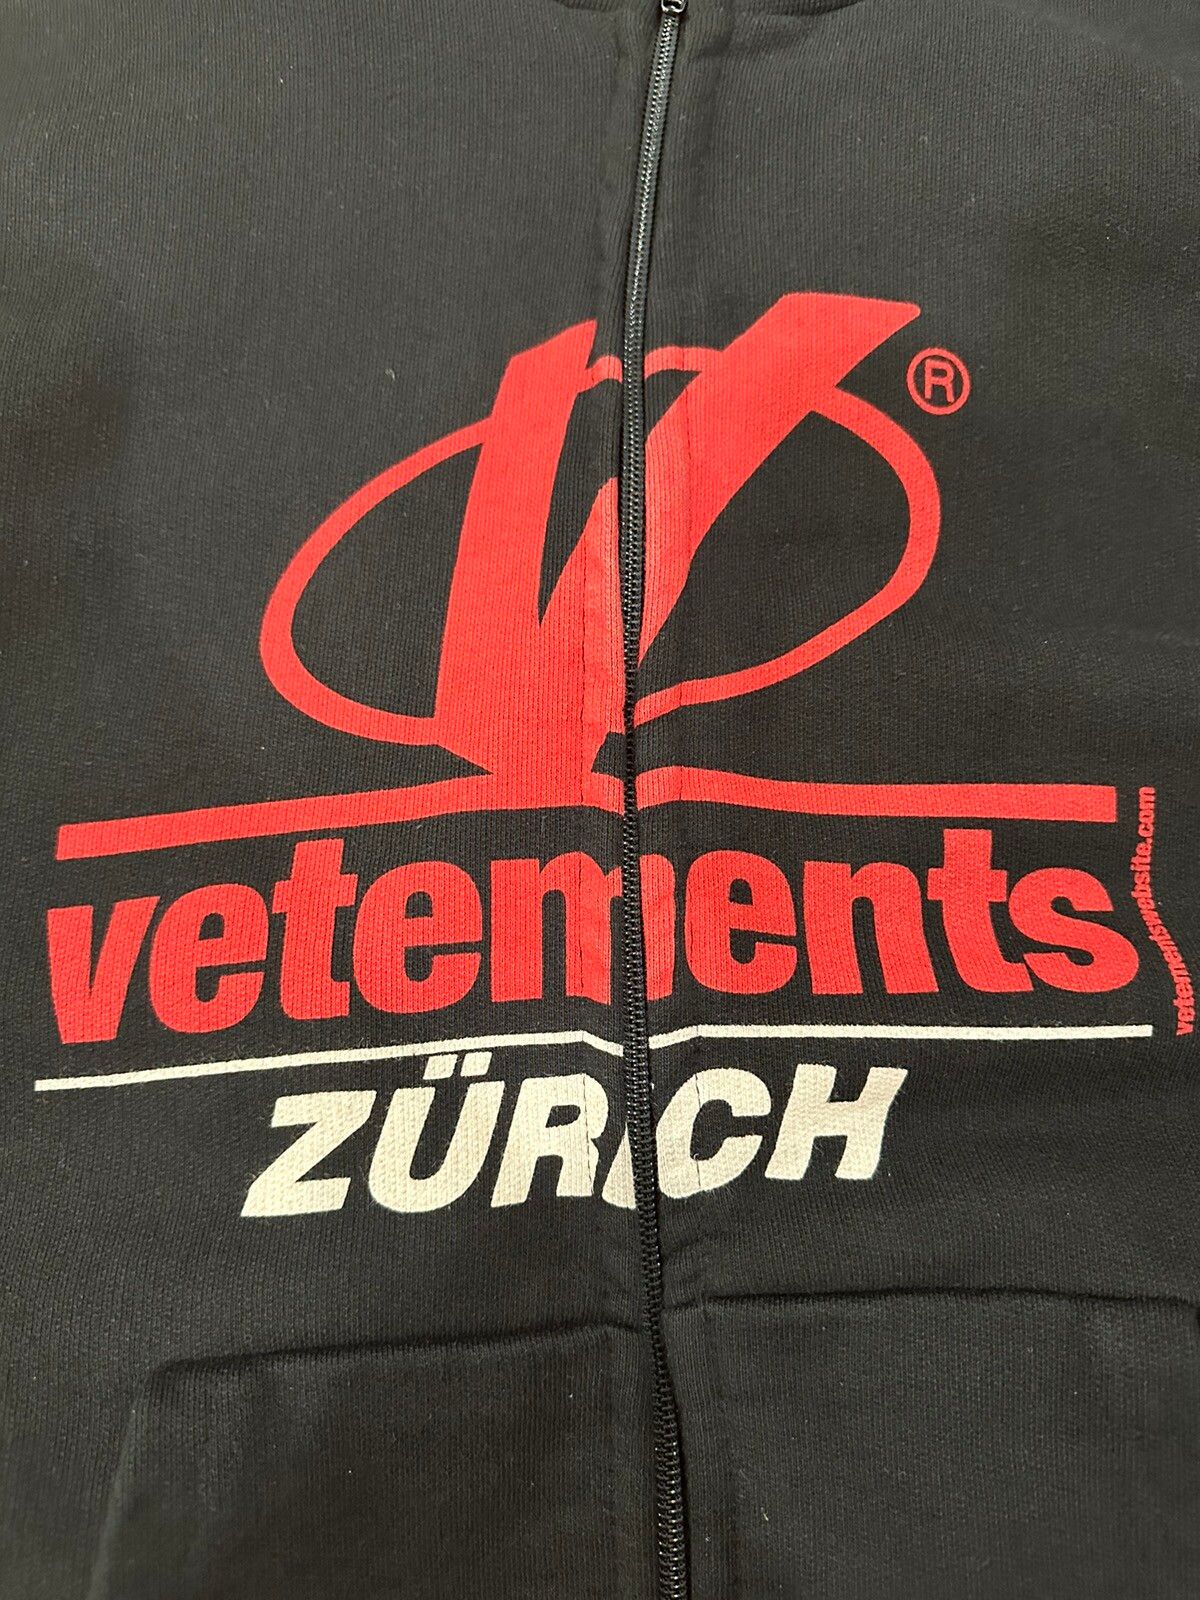 Vetements [Final Drop] Vetements SS18 Zurich Reversible Zip Up Hoodie Size US L / EU 52-54 / 3 - 10 Thumbnail